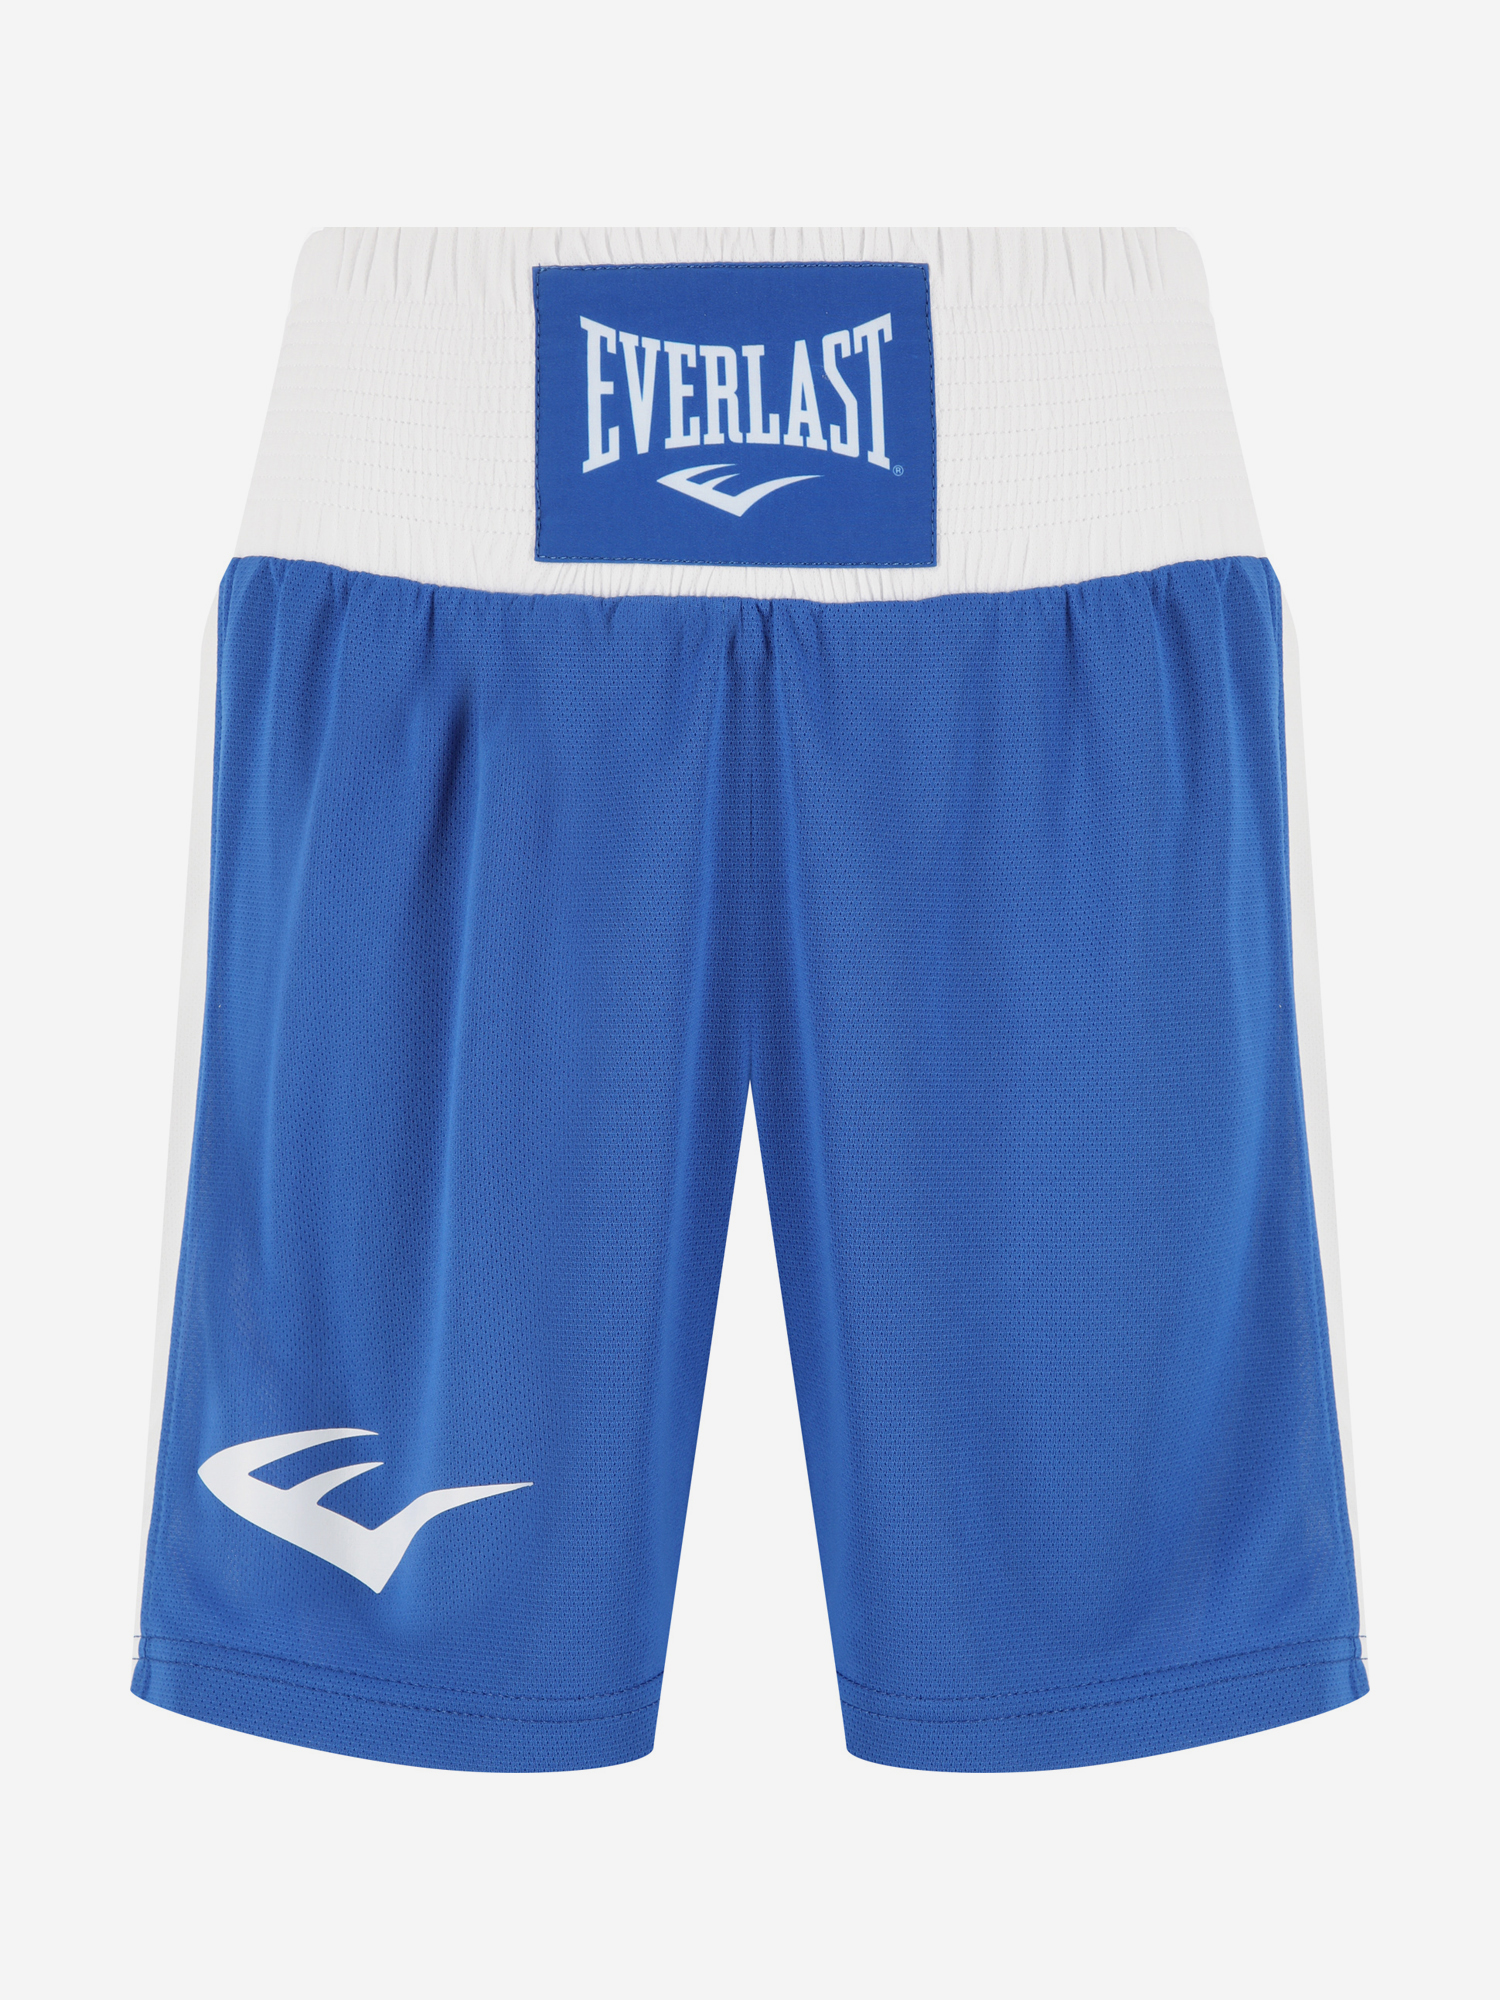 Шорты для бокса Everlast Shorts Elite, Синий перчатки боксерские everlast elite prostyle p00001206 16oz к з синий